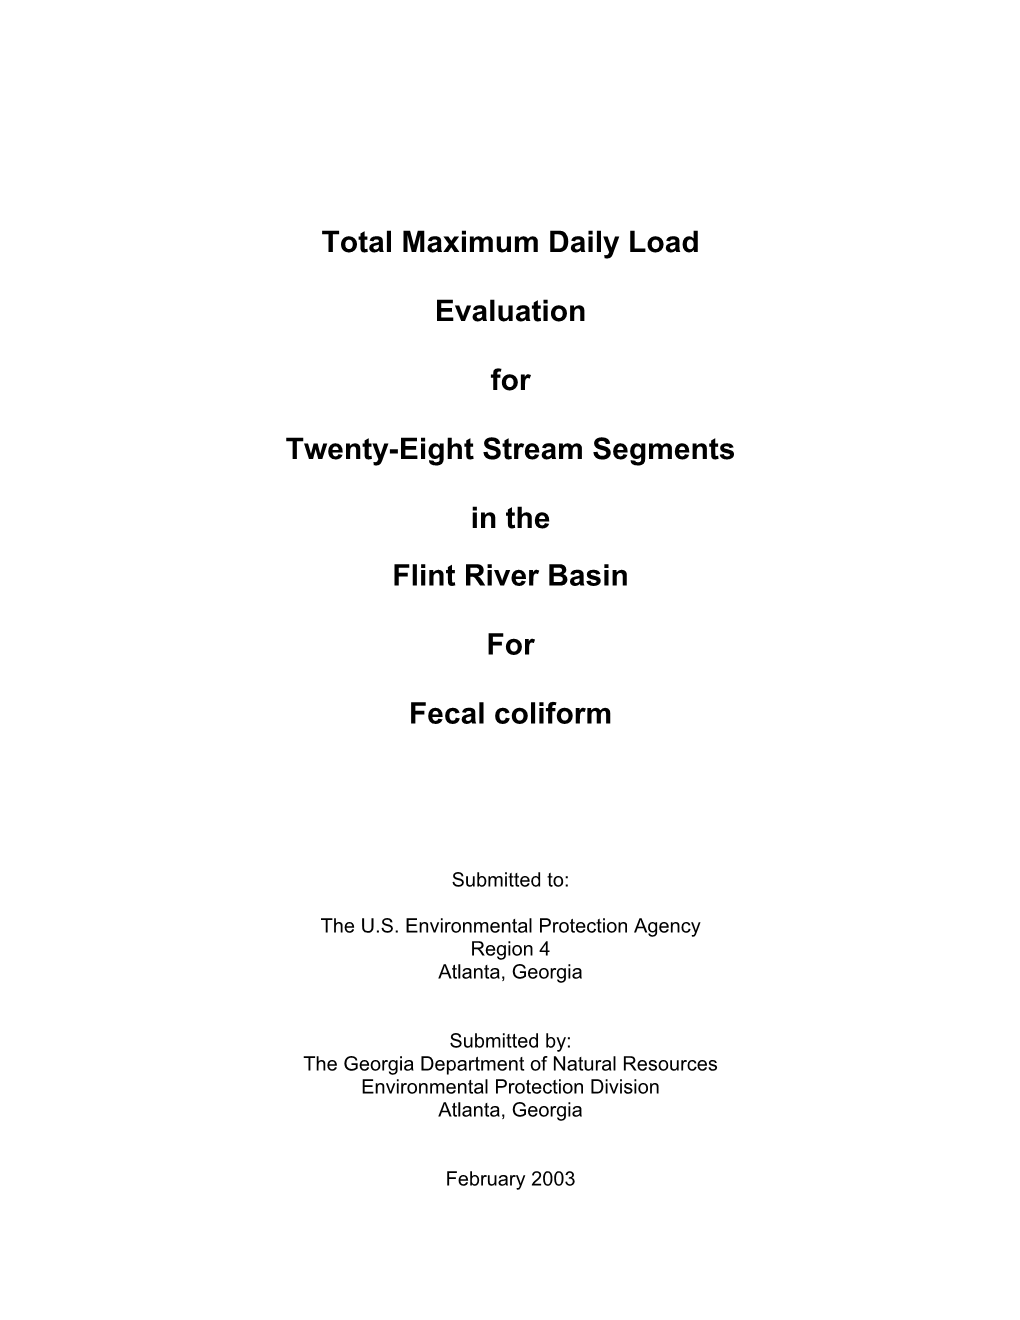 Total Maximum Daily Load Evaluation for Twenty-Eight Stream Segments